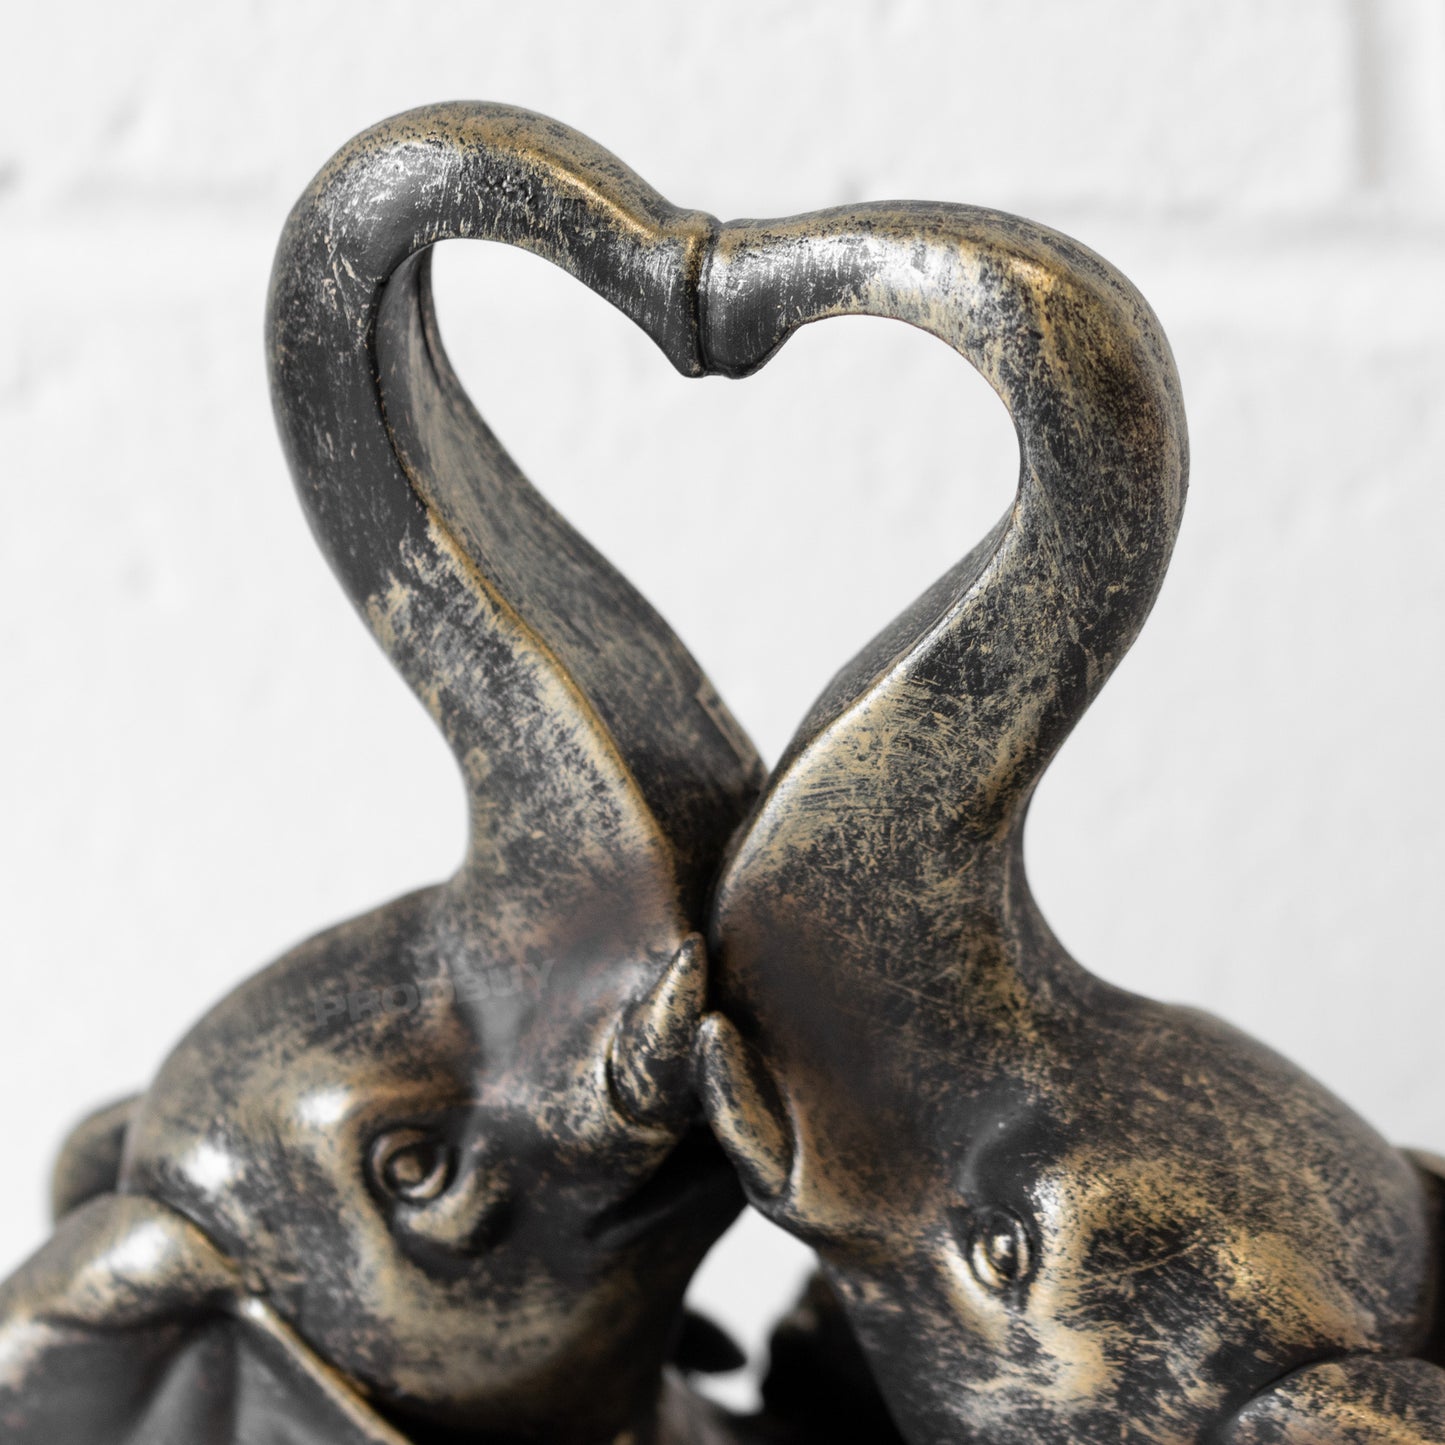 Pair of Elephants Love Heart Ornament